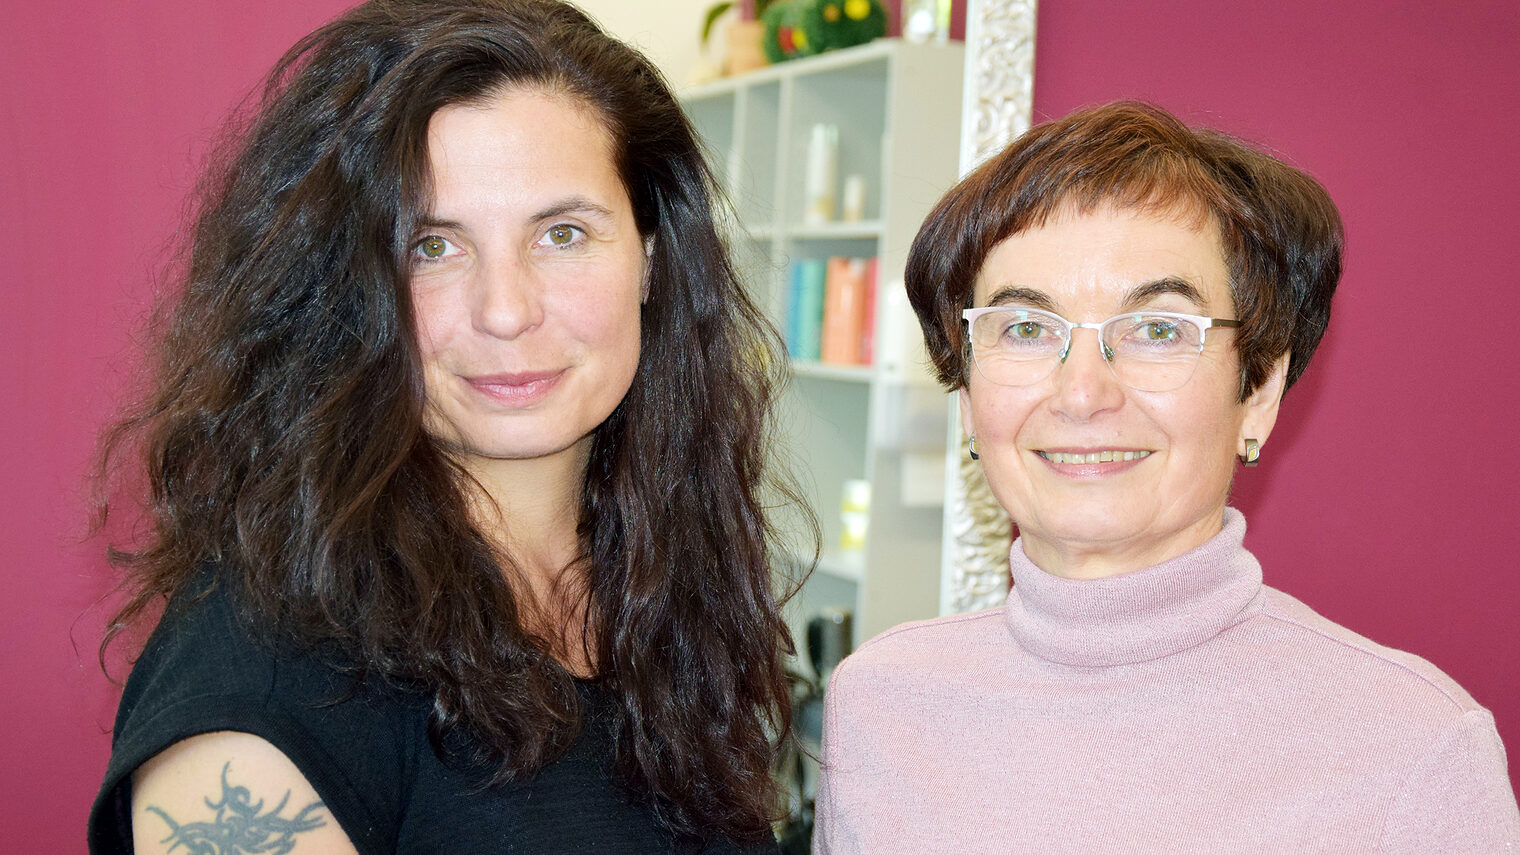 Friseursalon Lohse Franziska und Silvia-Sinske